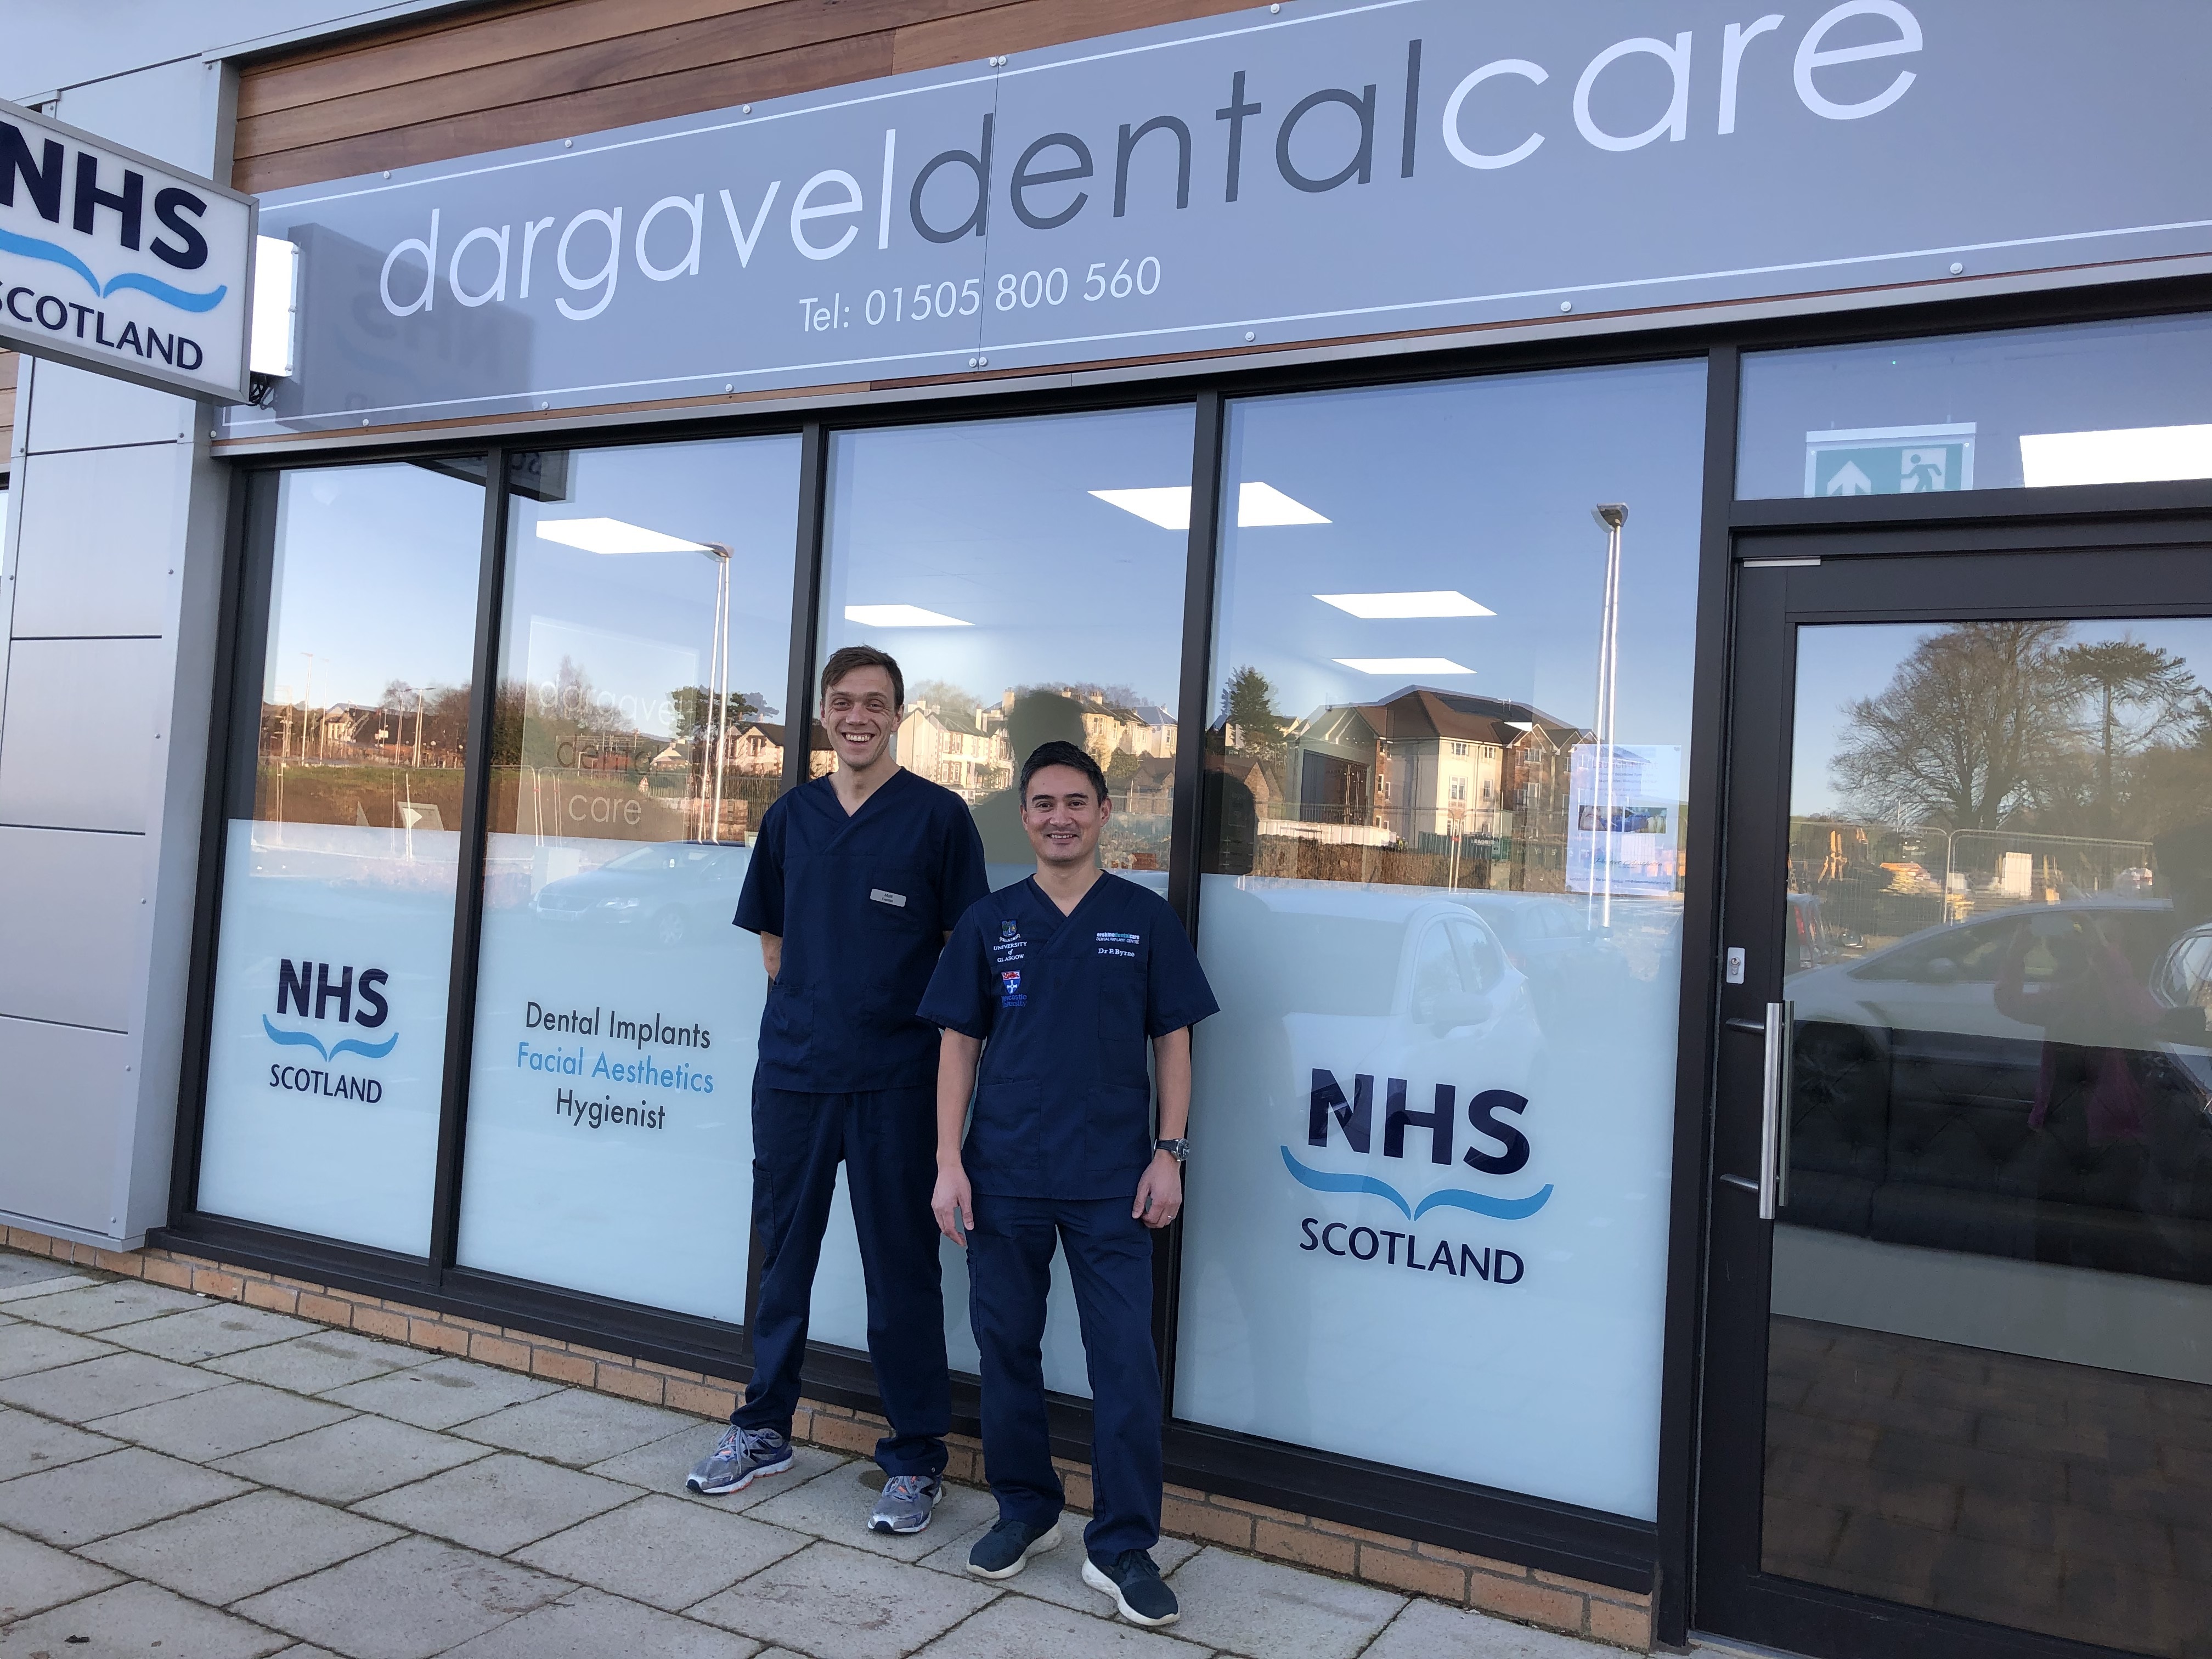 Renfrewshire-based Dargavel Dental Care opens new practice thanks to £130,000 RBS funding